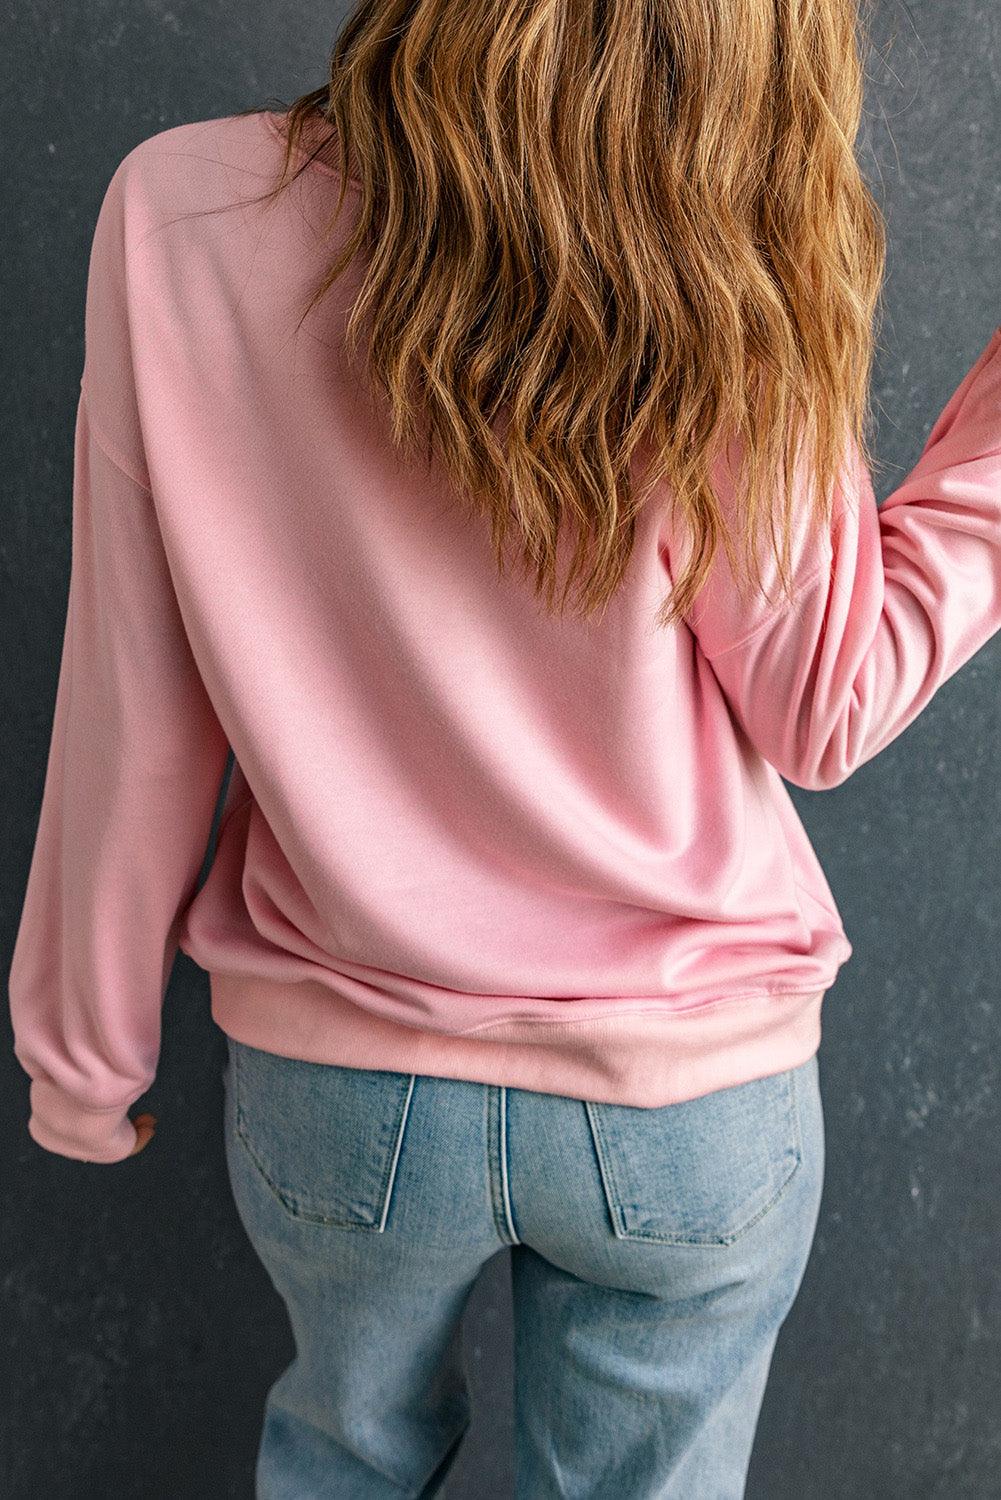 Pink SANTA BABY Sweet Floral Graphic Sweatshirt - L & M Kee, LLC